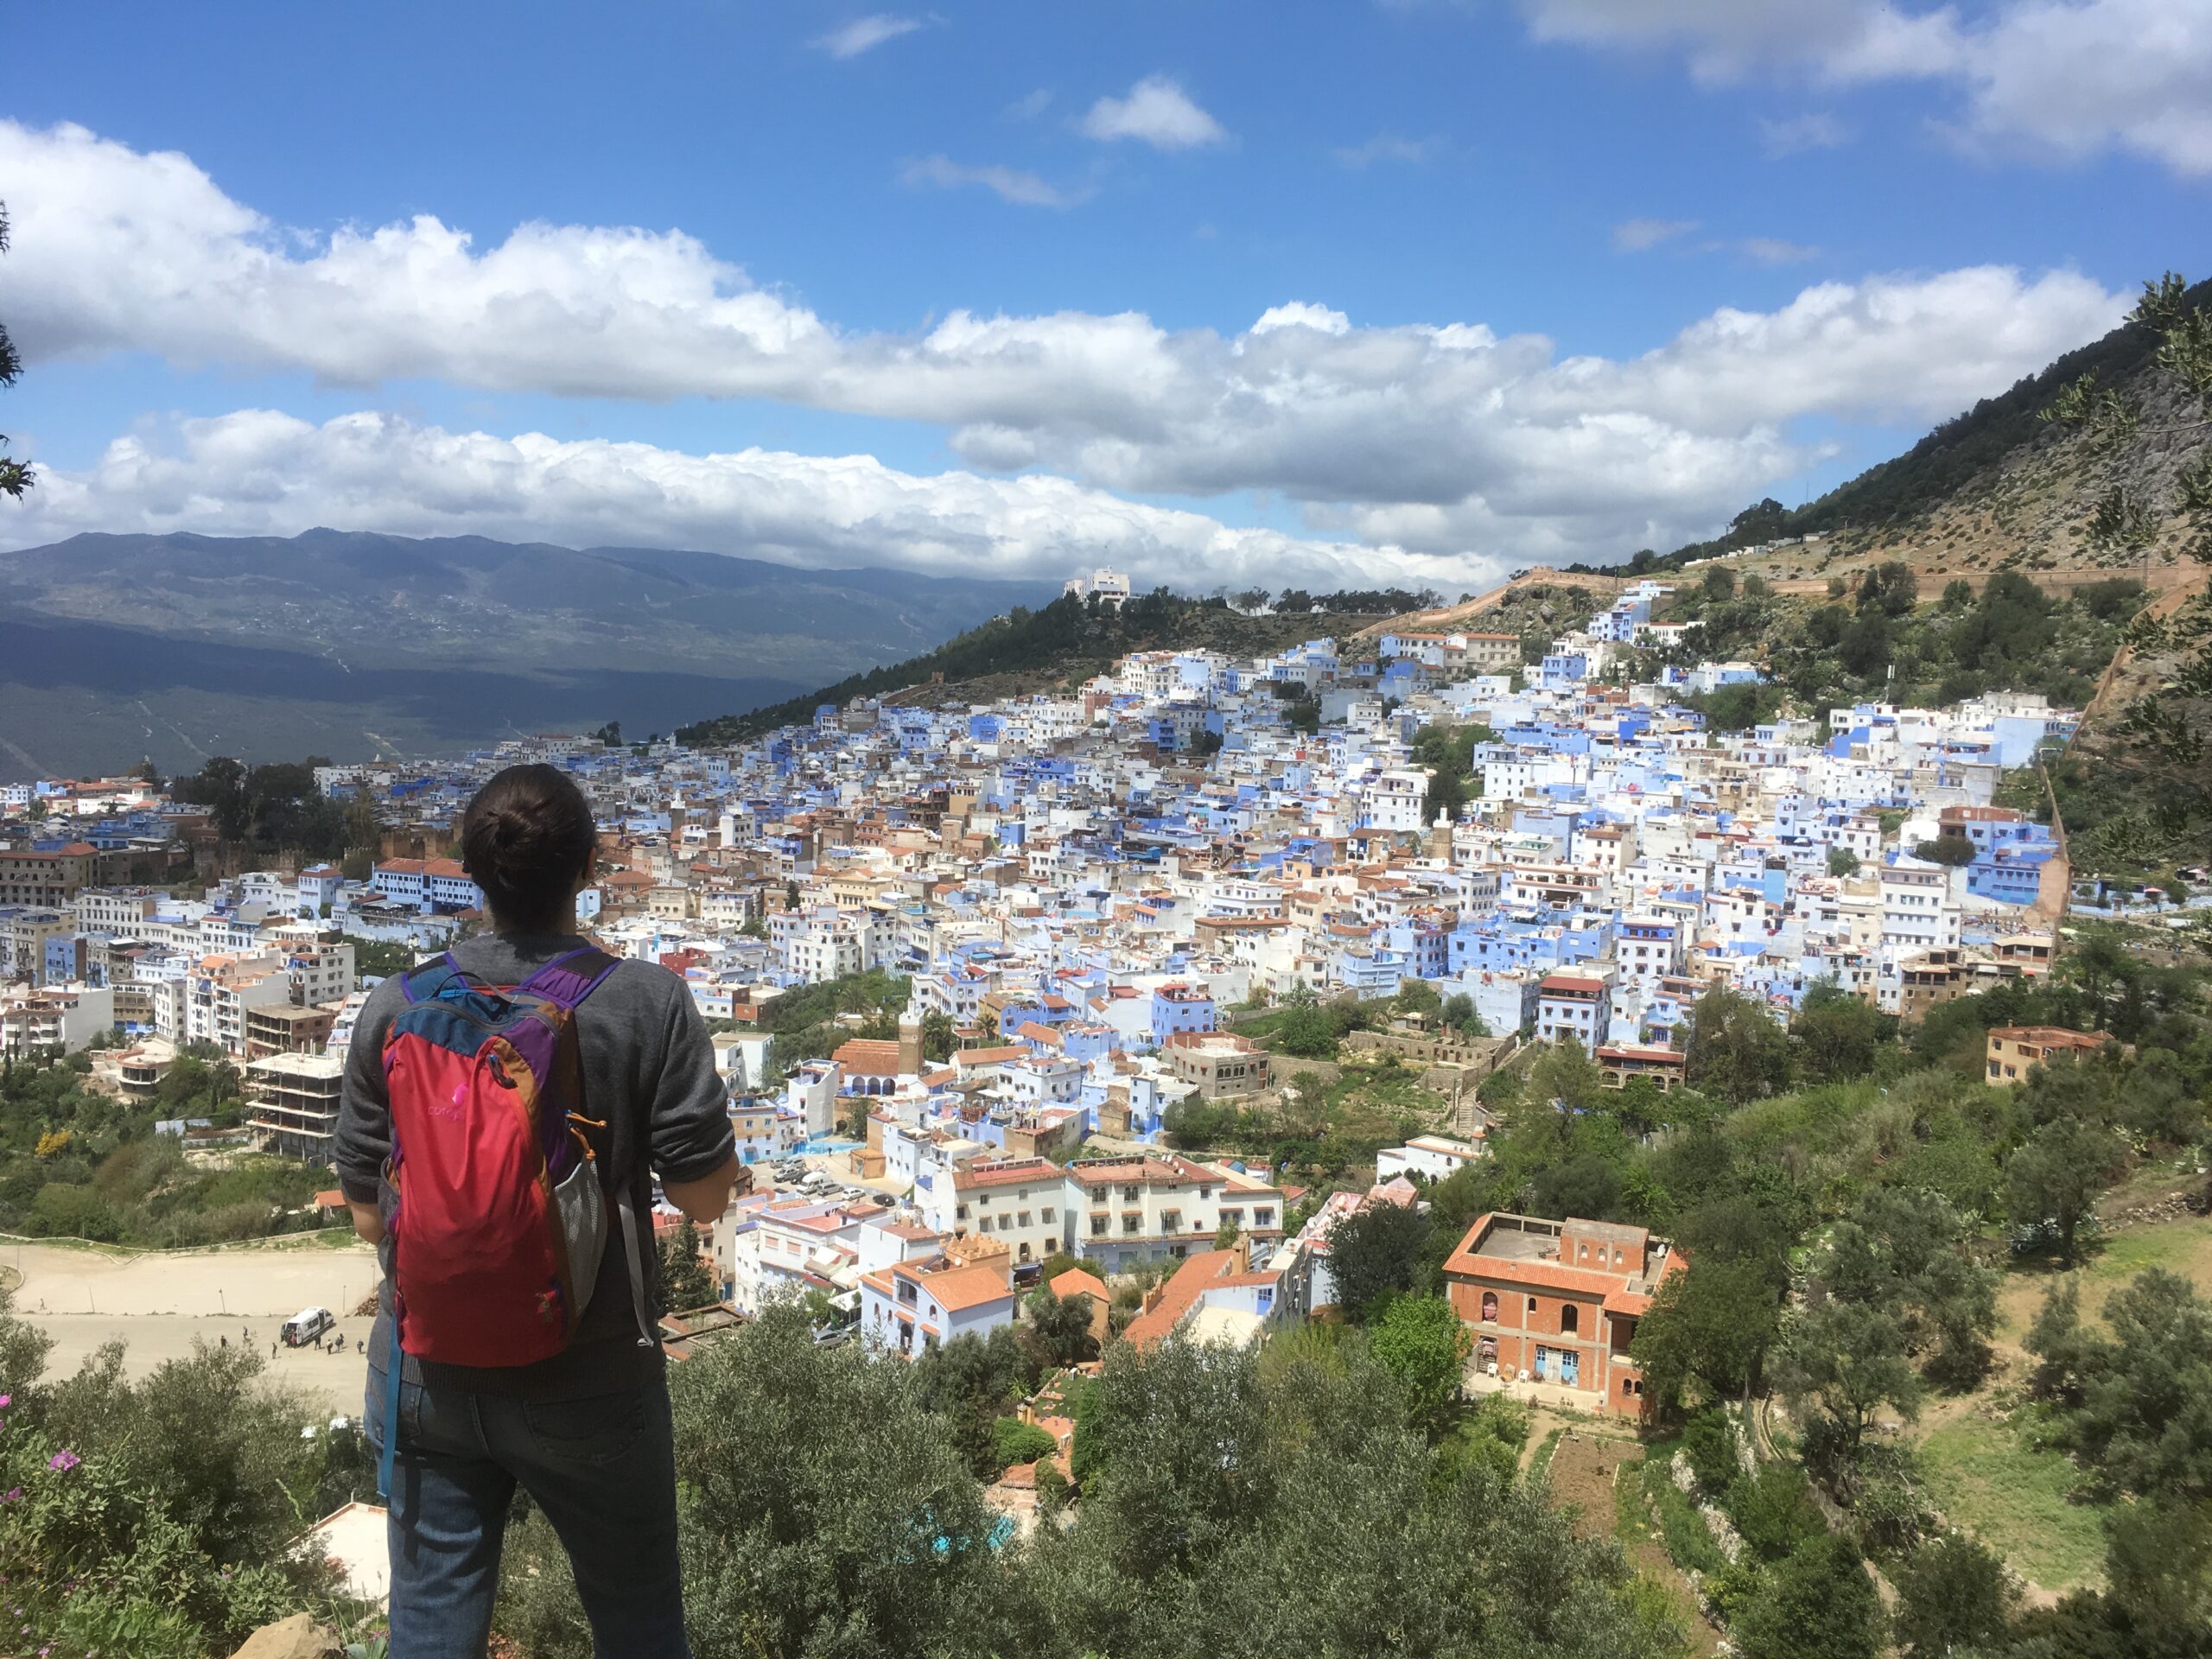 Chefchaouen, Morocco: Explore my city!